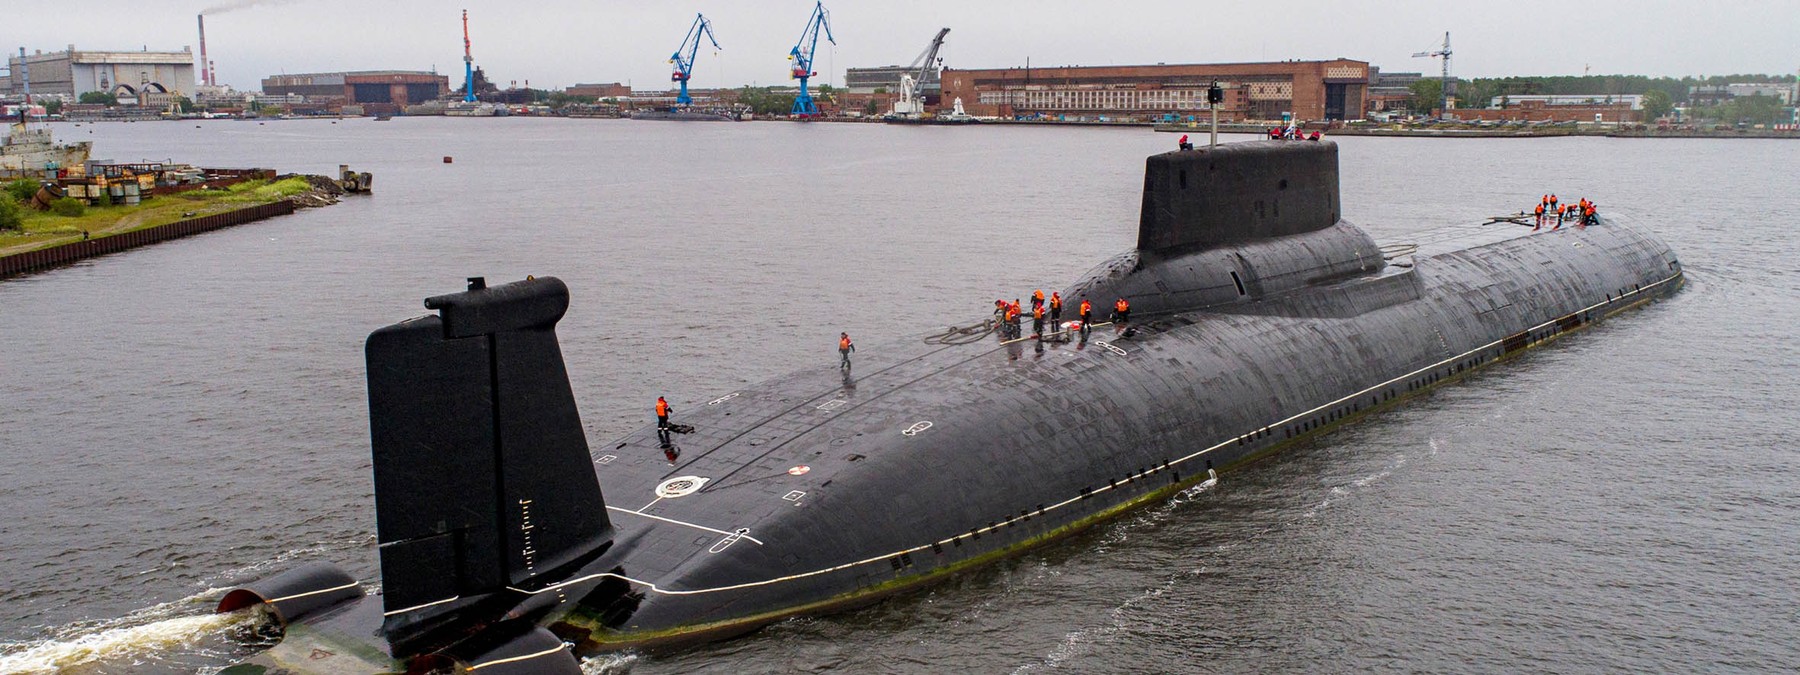 ruska jedrska podmornica Belgorod